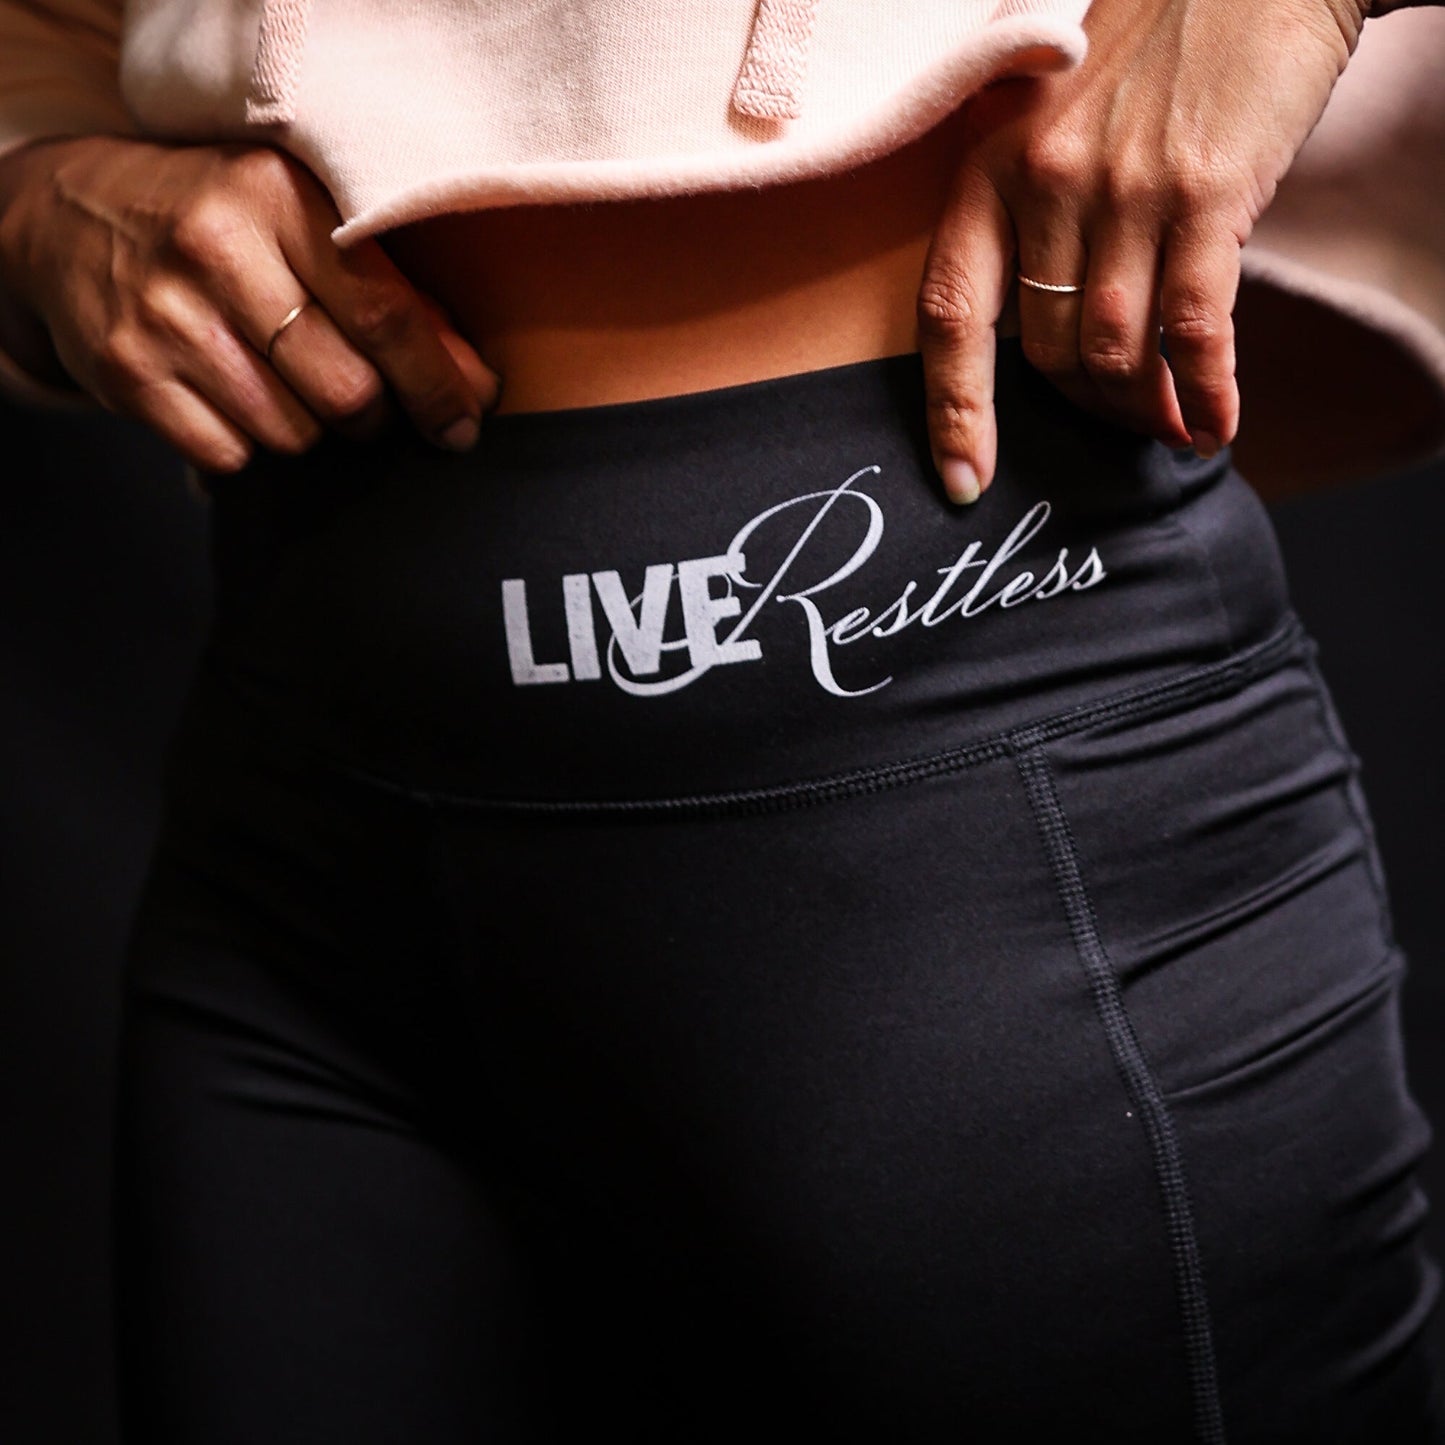 Live Restless Ladies Leggings - Black - Live Restless, LLC.